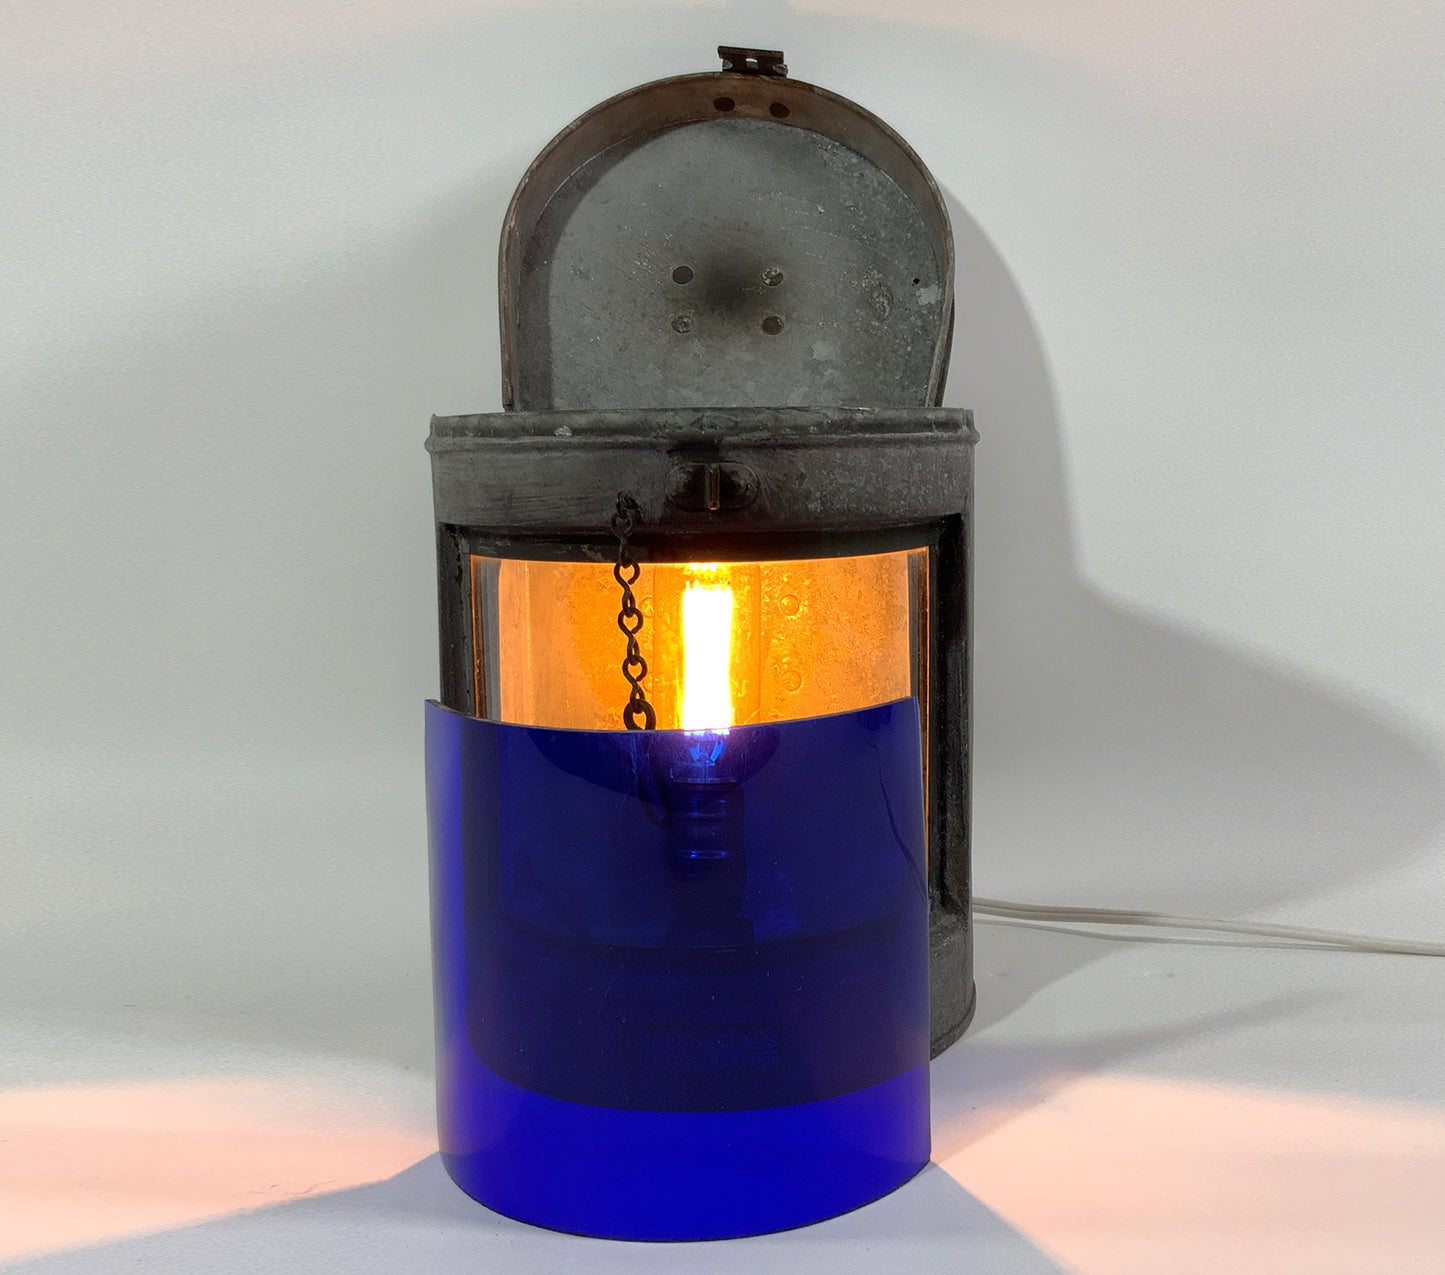 Ships Lantern With Cobalt Blue Lens - Lannan Gallery